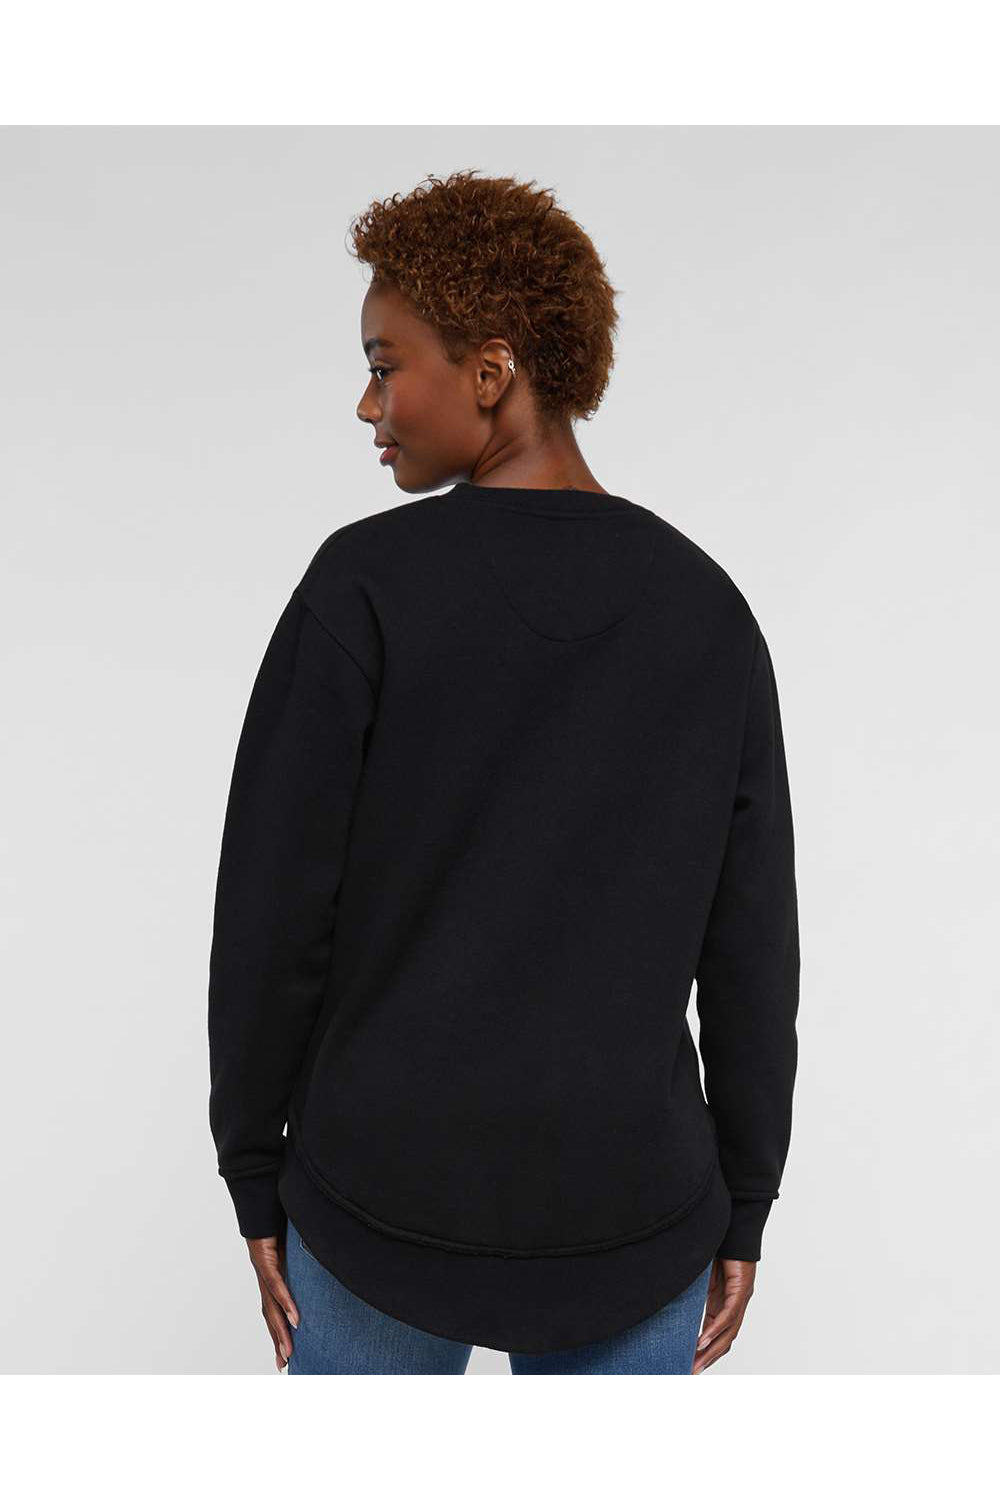 LAT 3525 Womens Weekend Fleece Crewneck Sweatshirt Black Model Back